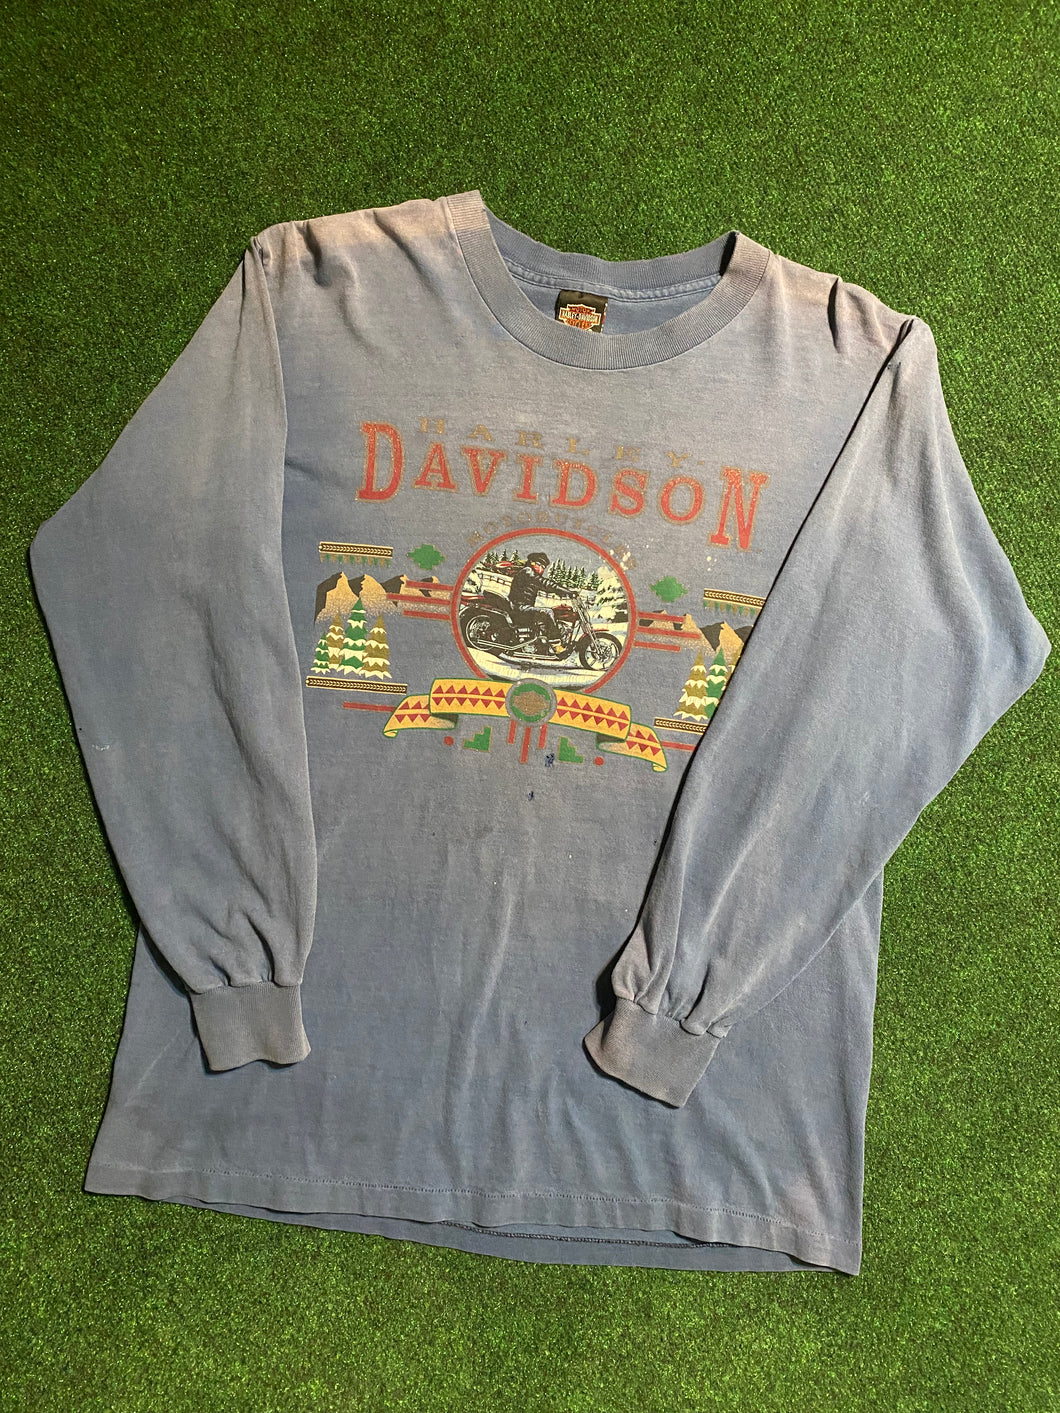 Vintage 1995 Daytona Harley Davidson Long Sleeve Tee - Medium